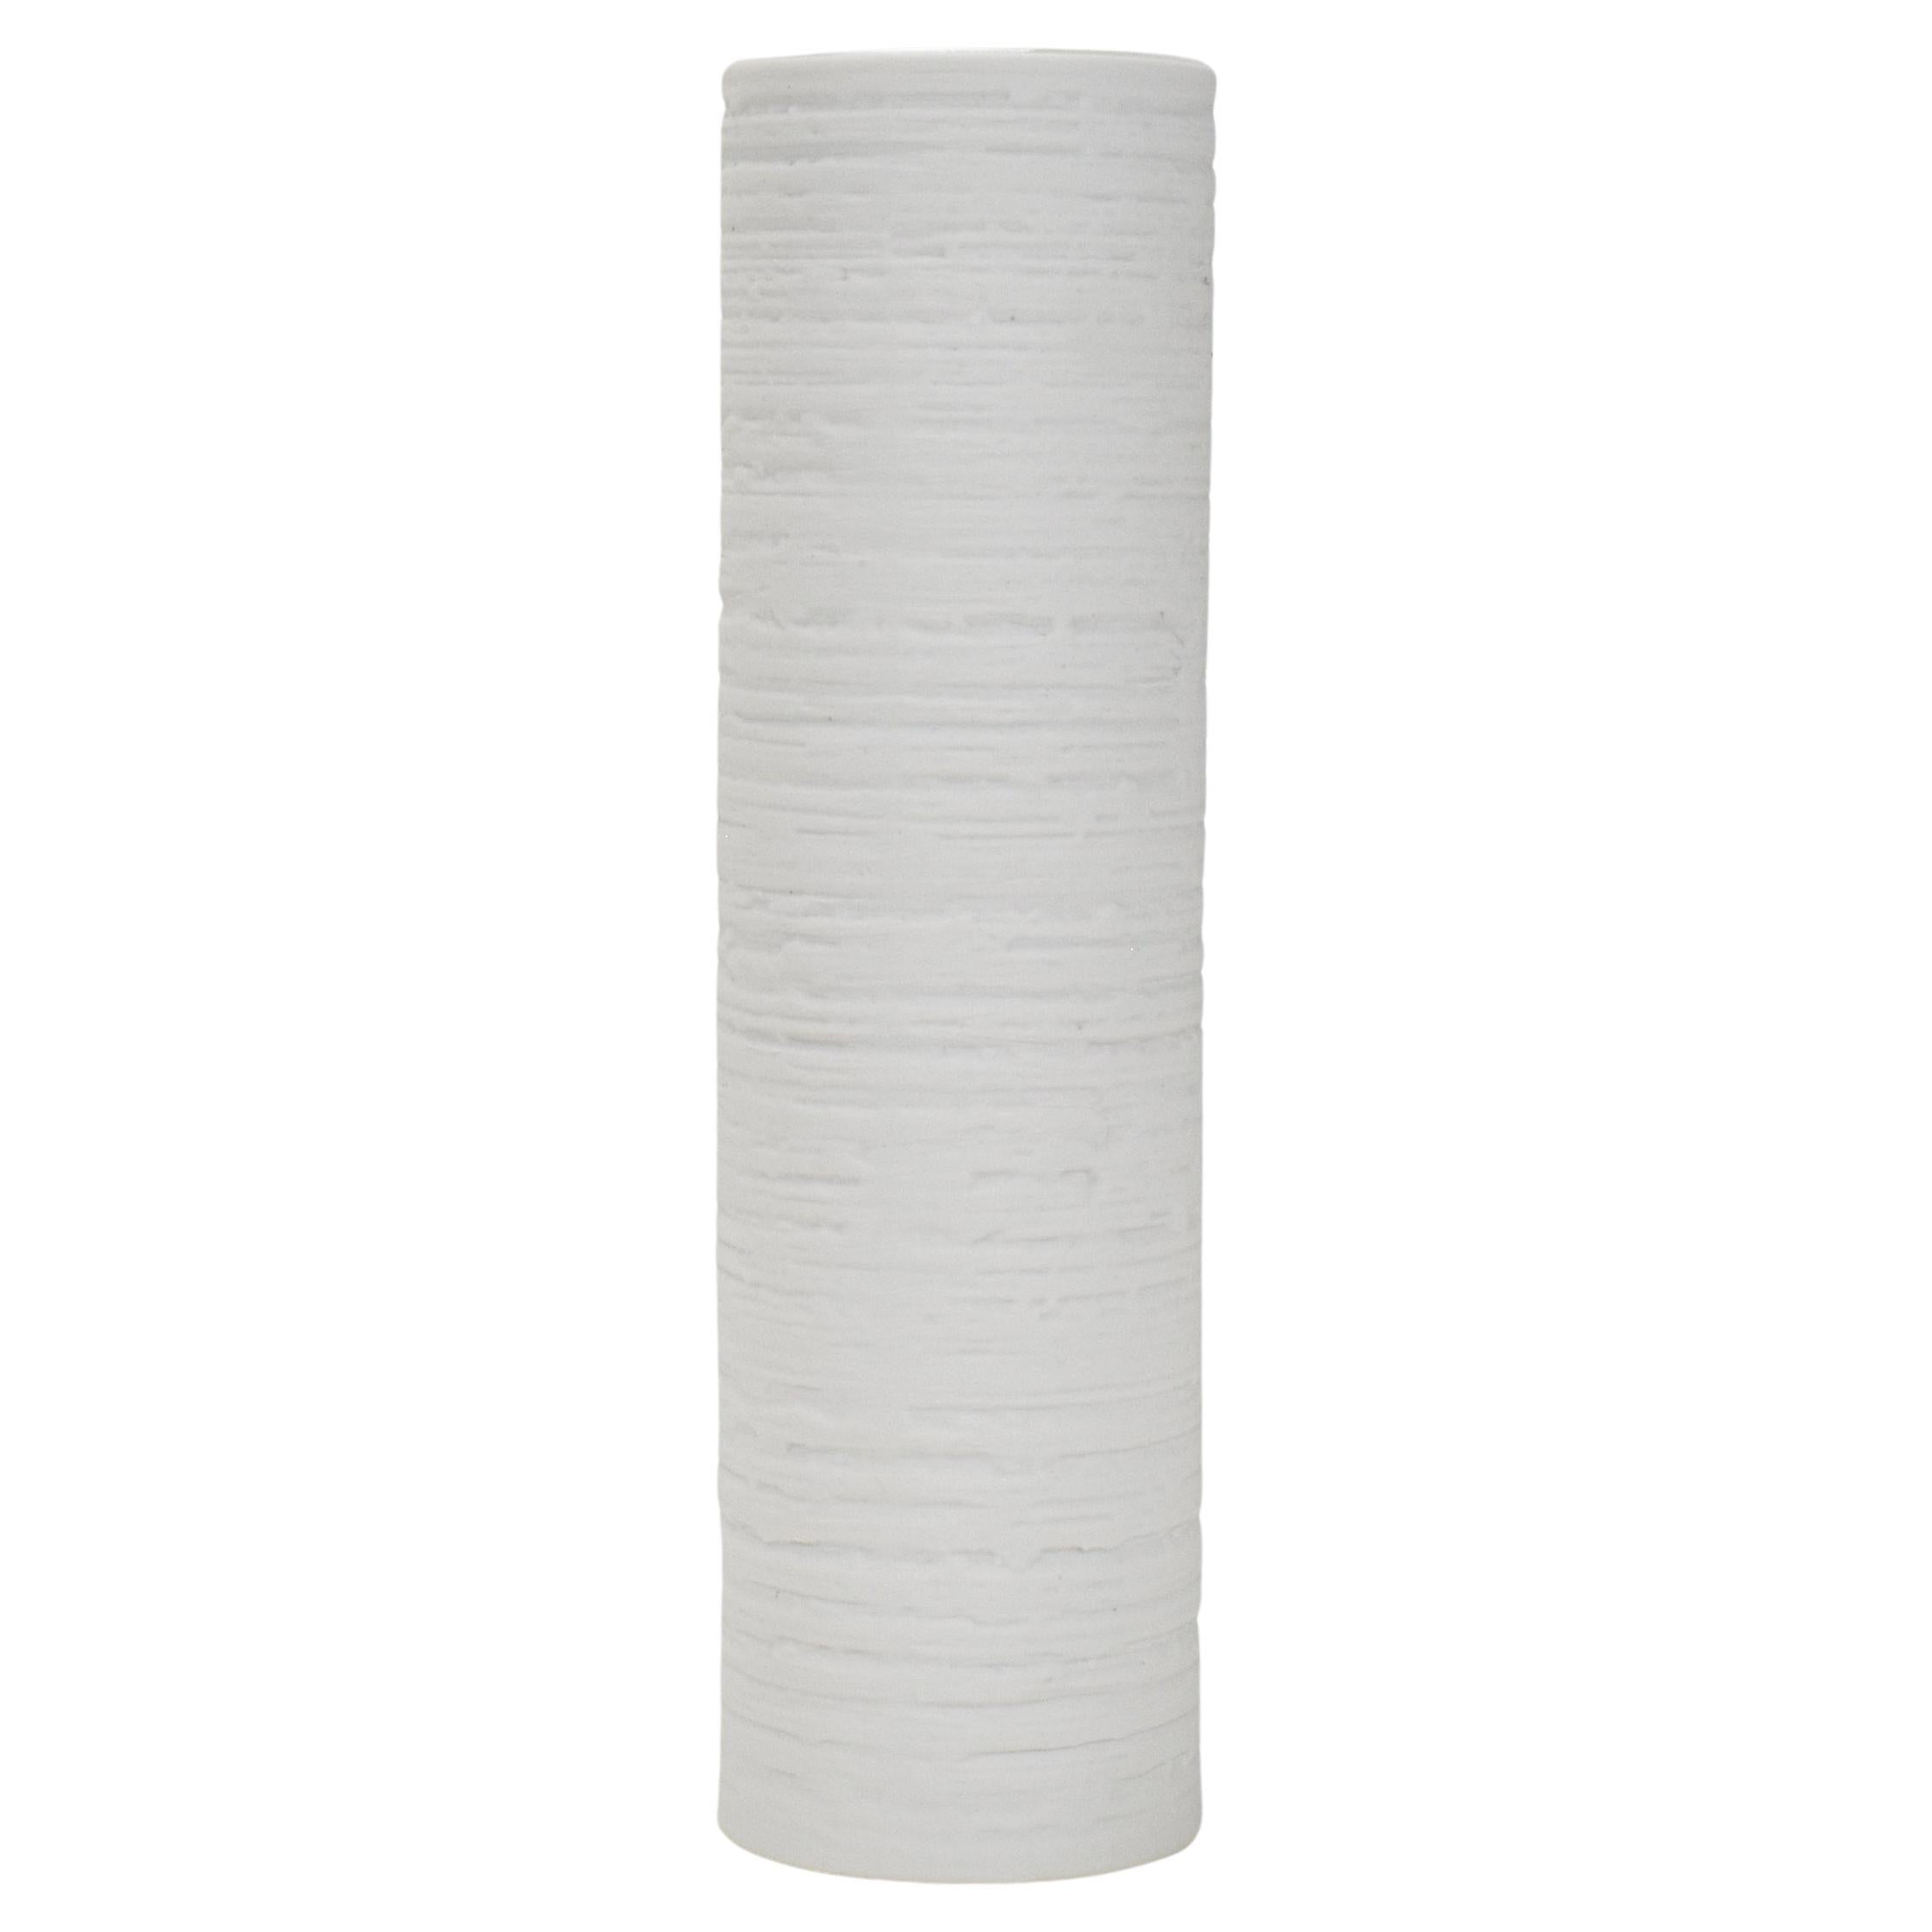 Arzberg Op Art White Bisque Porcelain Vase Concrete Pattern Surface For Sale